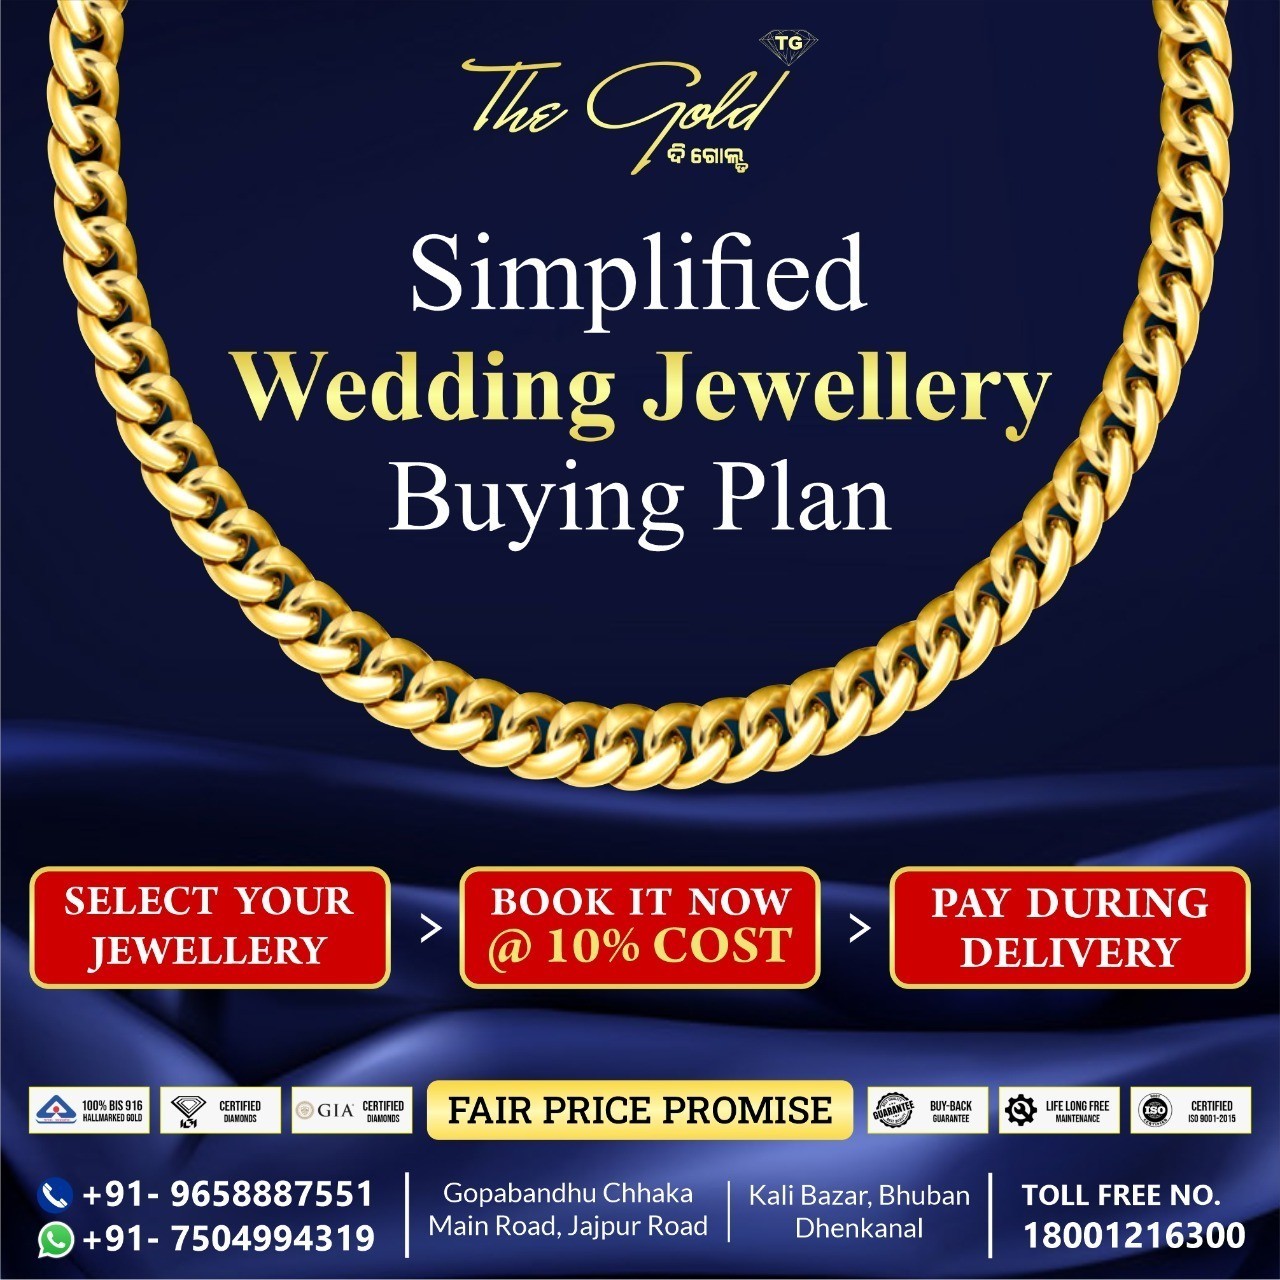 Top jewellery shops in jajpur road